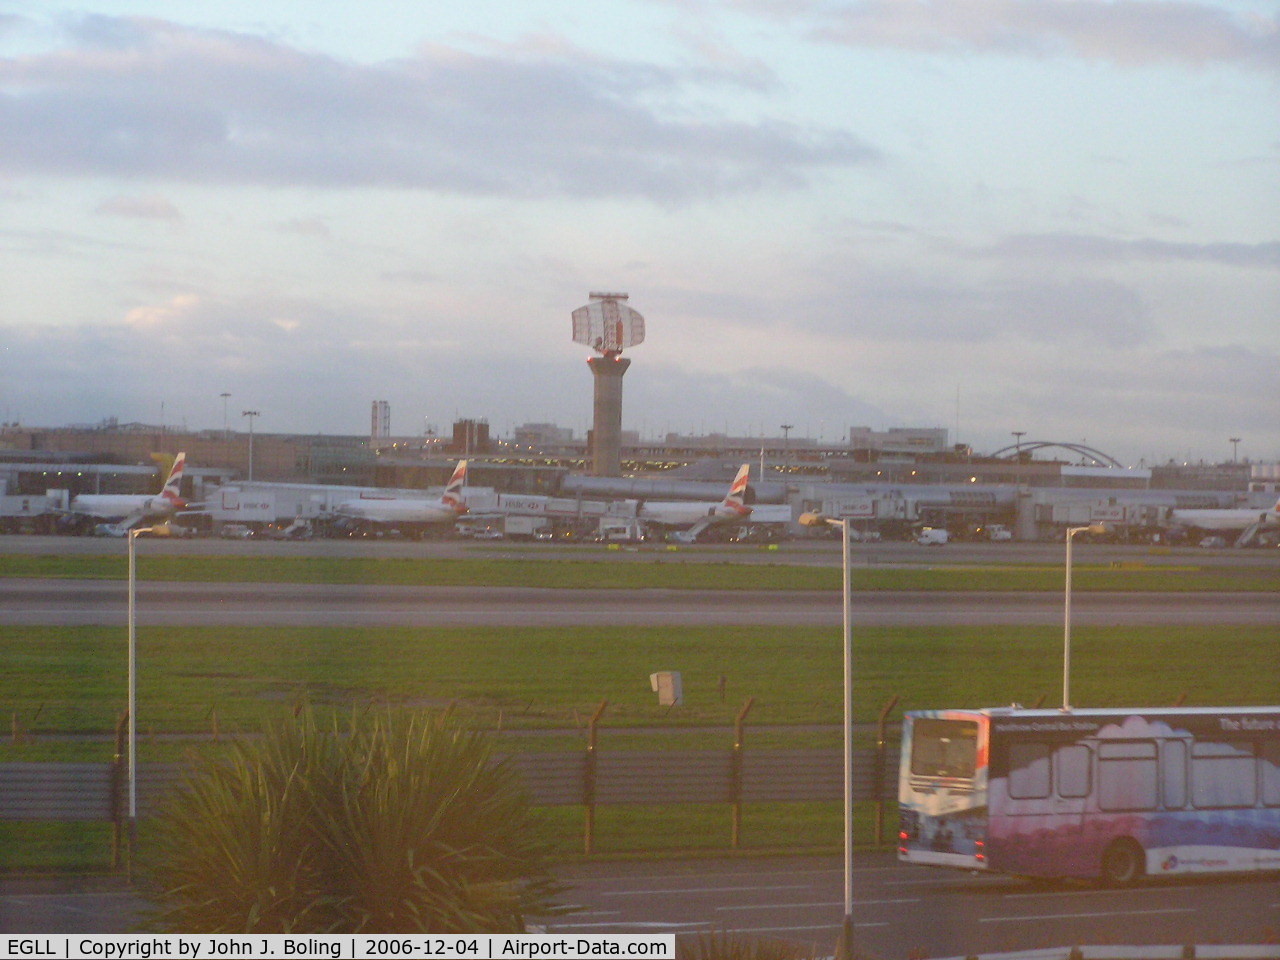 London Heathrow Airport, London, England United Kingdom (EGLL) - Terminal 1 and runway 27R at Heathrow.